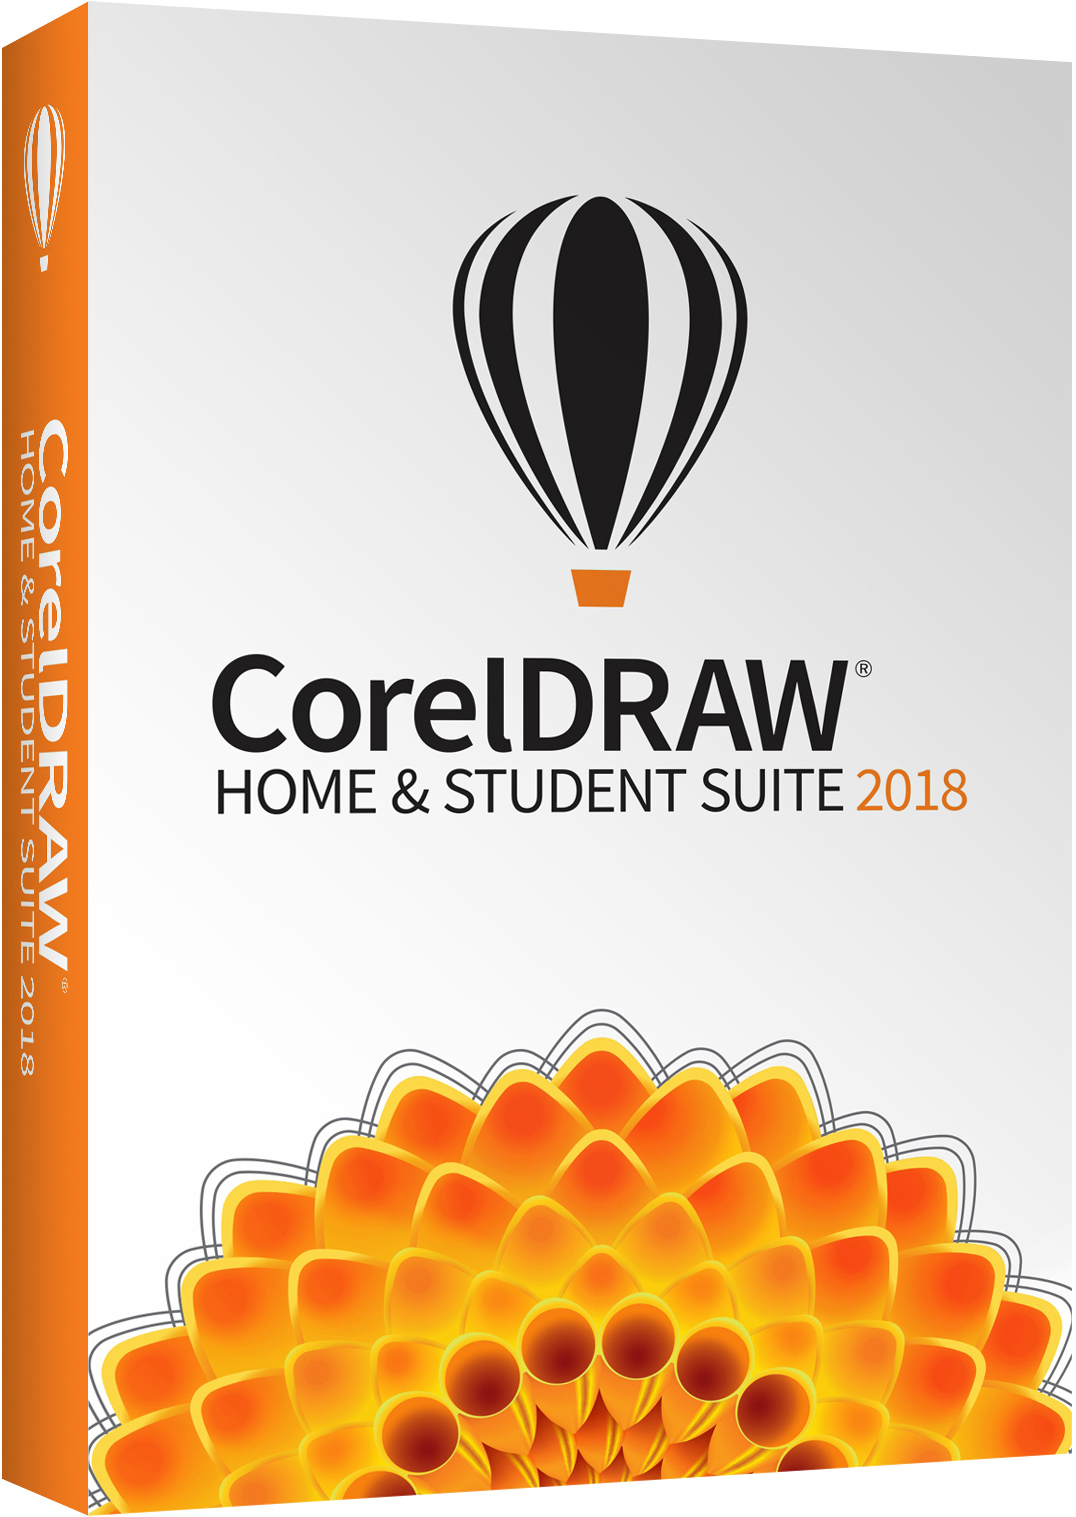 CorelDRAW Home & Student Suite 2018 [Цифровая версия] (Цифровая версия) цена и фото